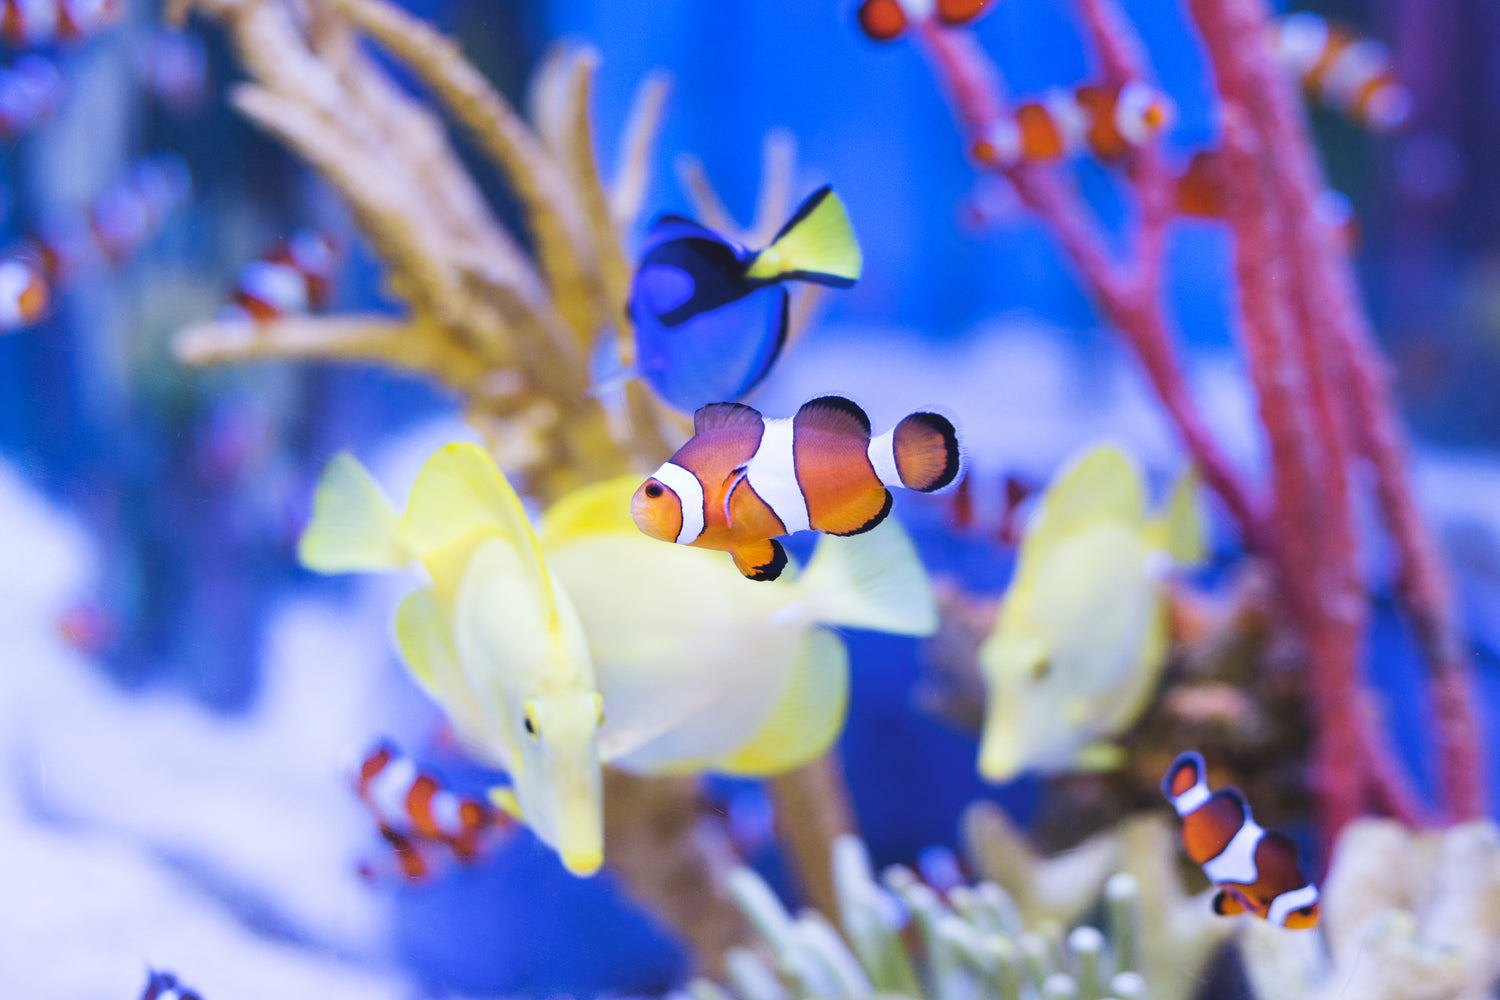 clown fish and friends in a salt water aquarium